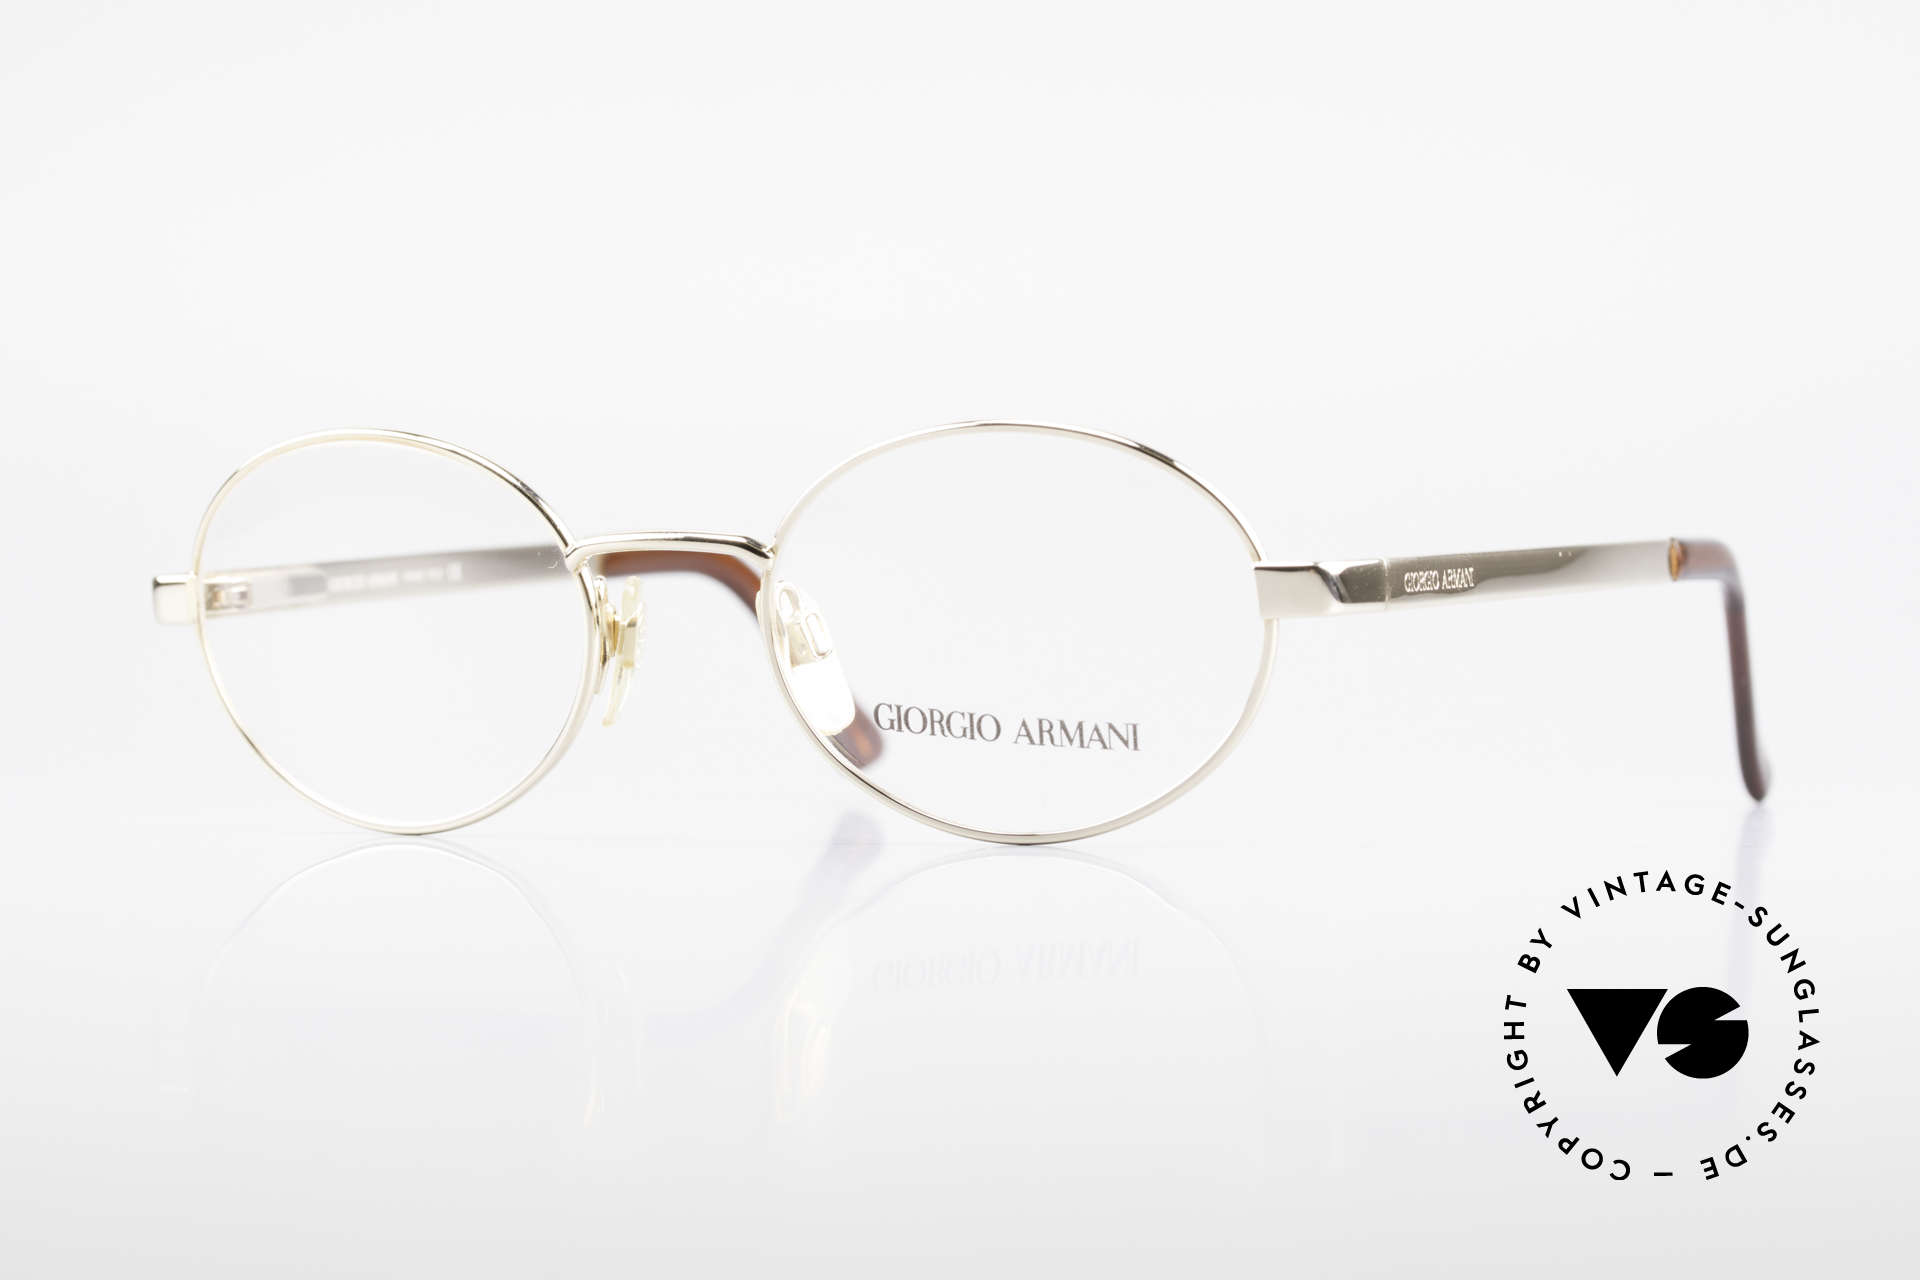 Giorgio Armani 257 Designer Vintage Frame Oval, oval designer eyeglass-frame by GIORGIO ARMANI, Made for Men and Women